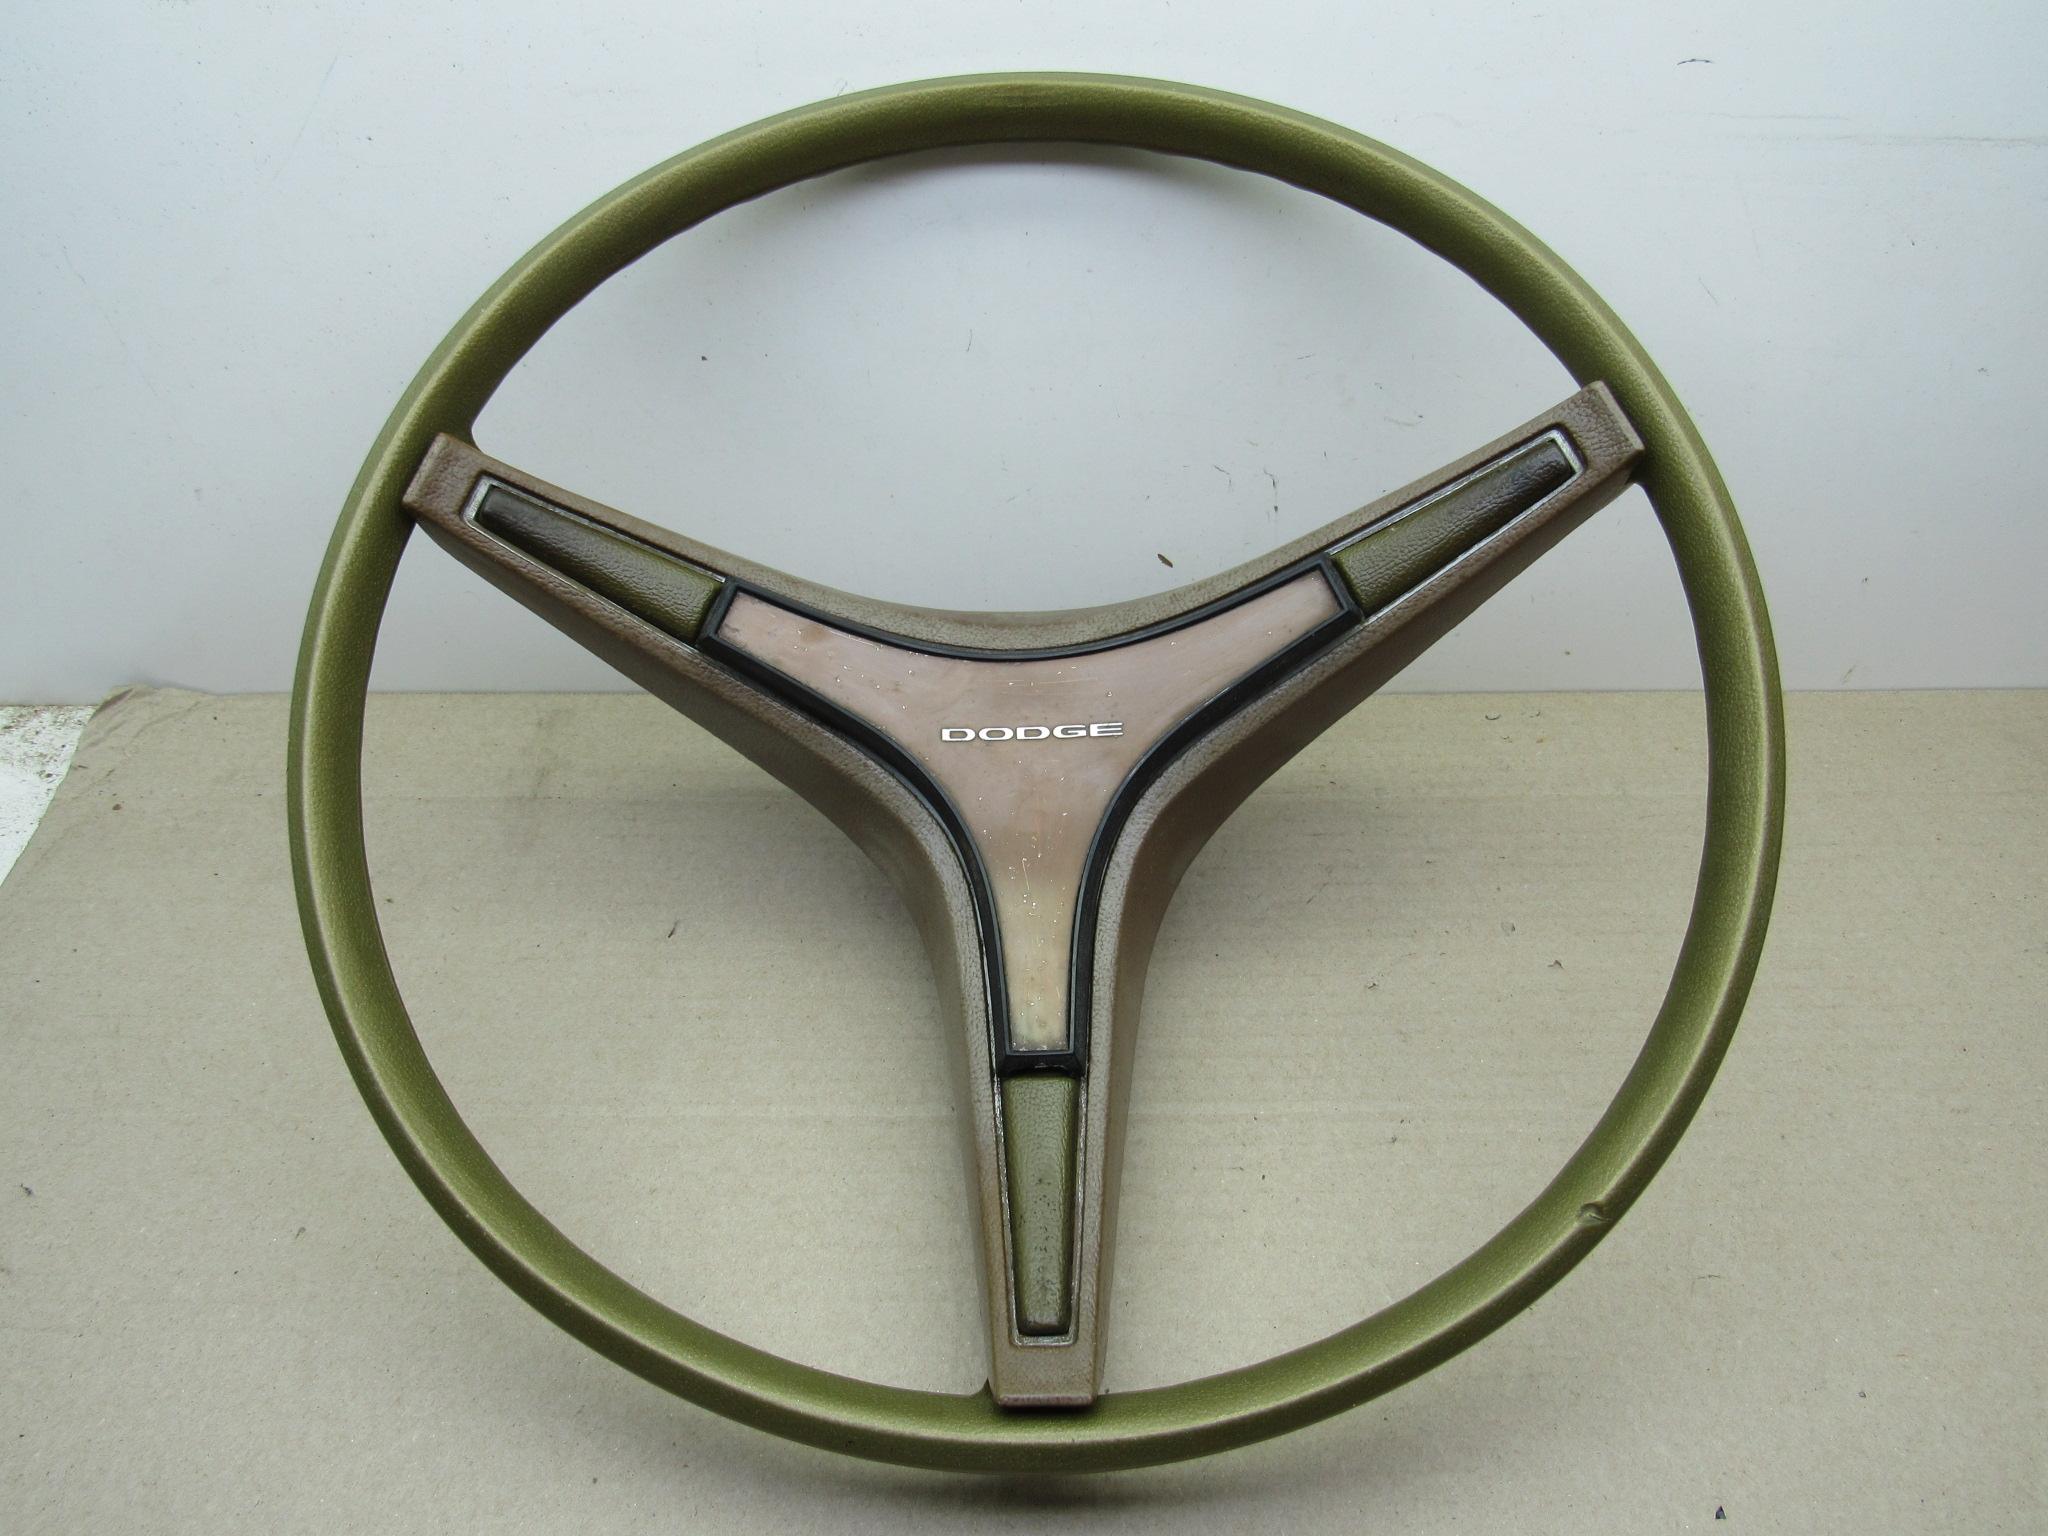 Tigger Orange Steering Wheel Cover,Disney Car Accessories,Steering Wheel  Cover sold by Chocolate Licha, SKU 42700081